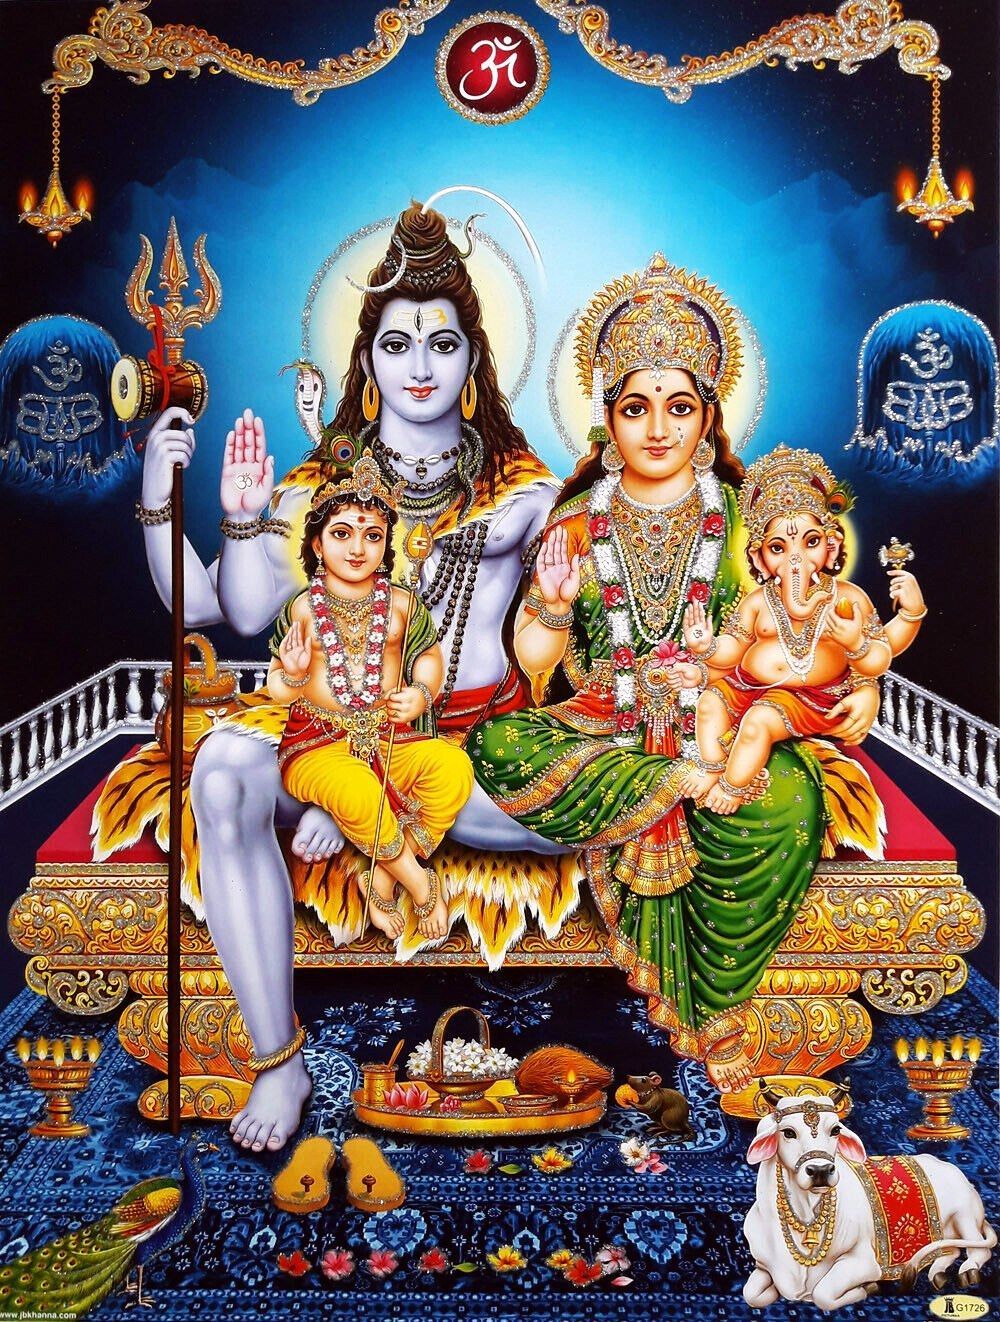 Lord Shiva and Parvati as ardhnarishwar on lotus in creative art painting  wallpaper | Lord shiva painting, Painting wallpaper, Lord ganesha